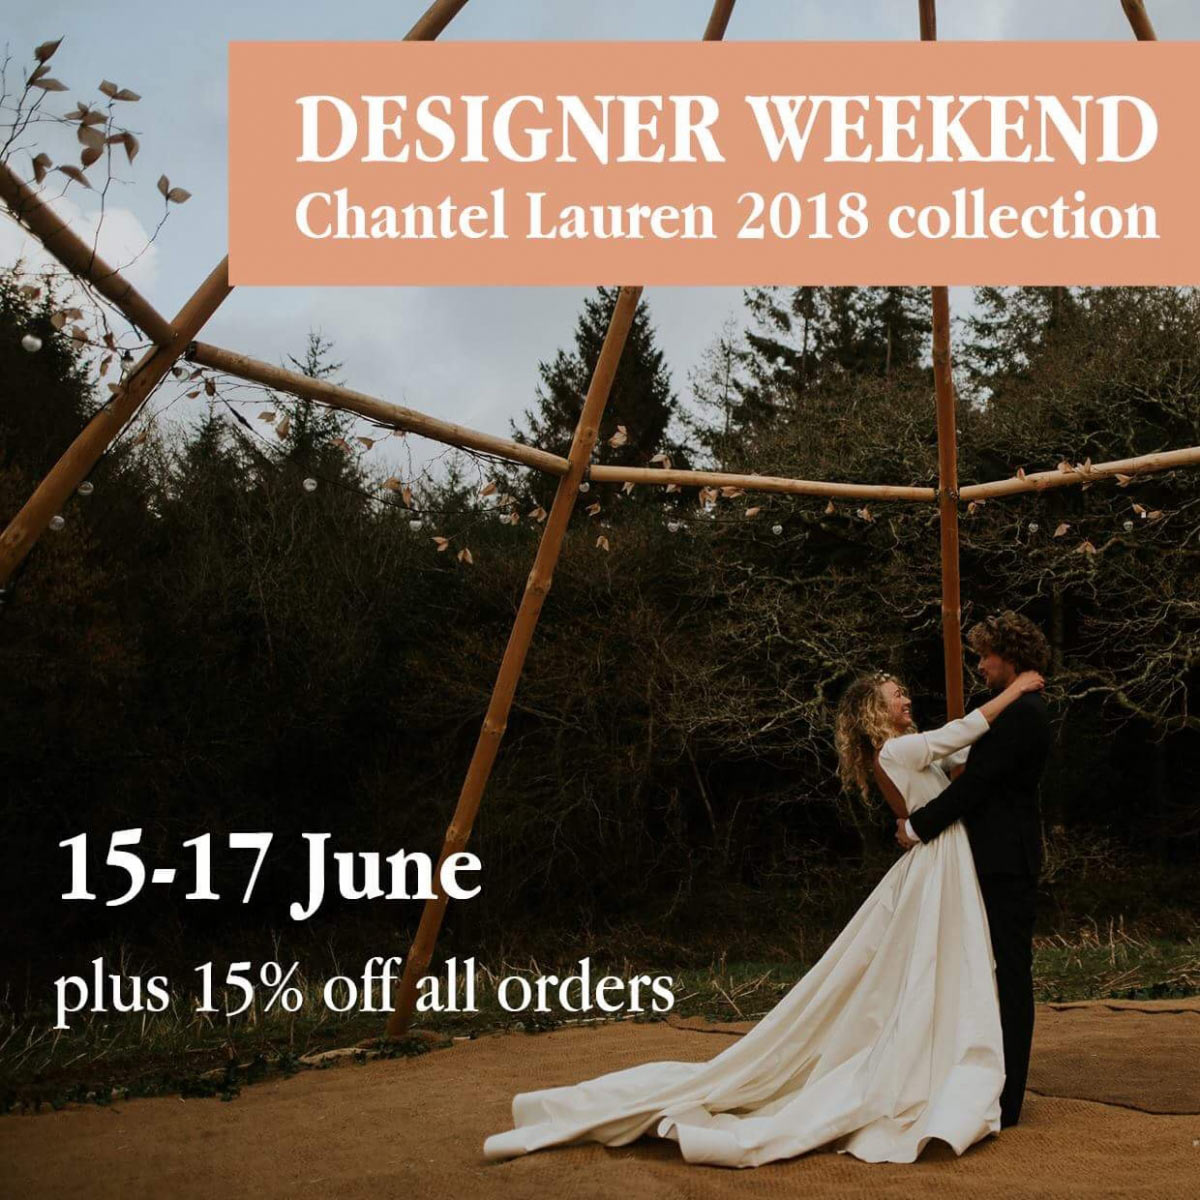 The Bridal Room St Ives' Chantel Lauren Designer Weekend